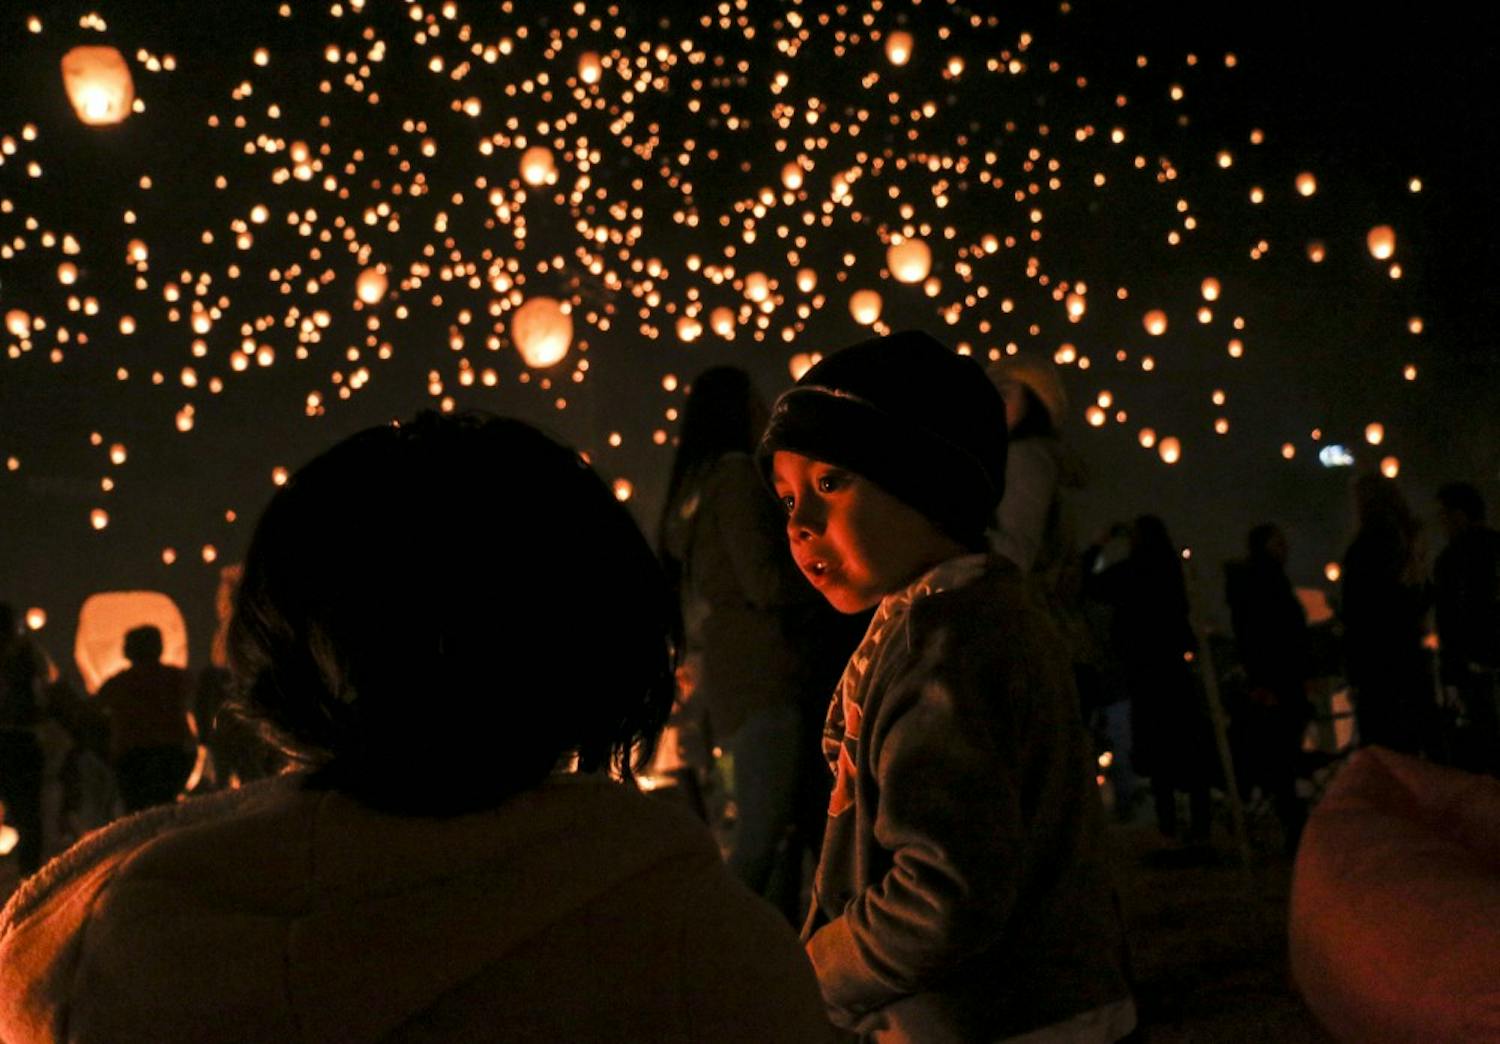 Annual Lantern Fest Lights up the Sky